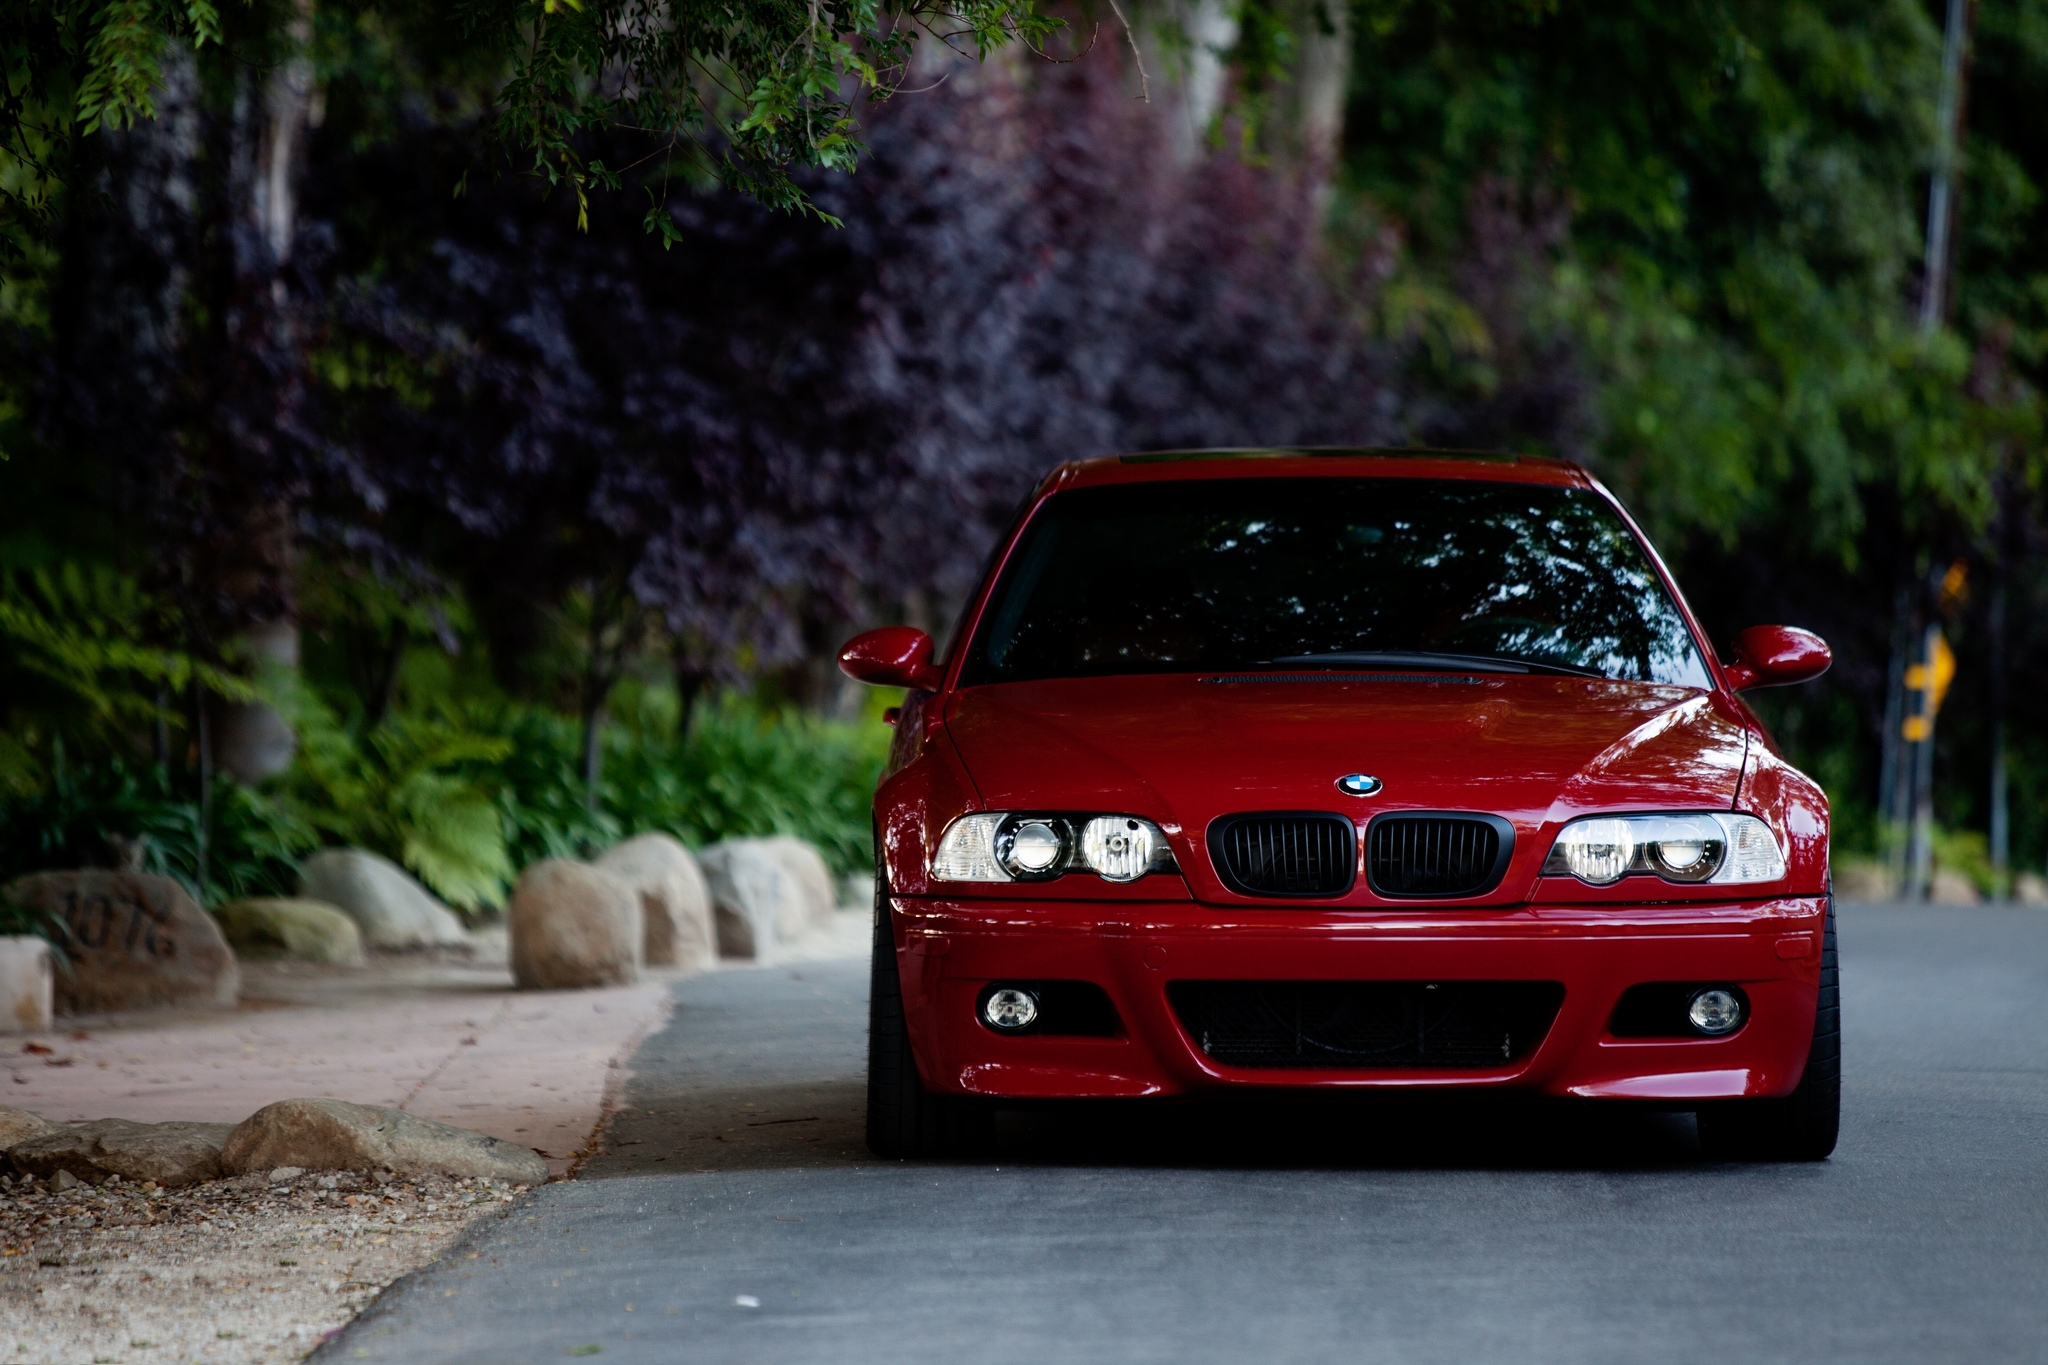 Картинки бмв. Красная BMW e46. БМВ е39 красная. BMW m3 e46 красная. BMW e46 4k.